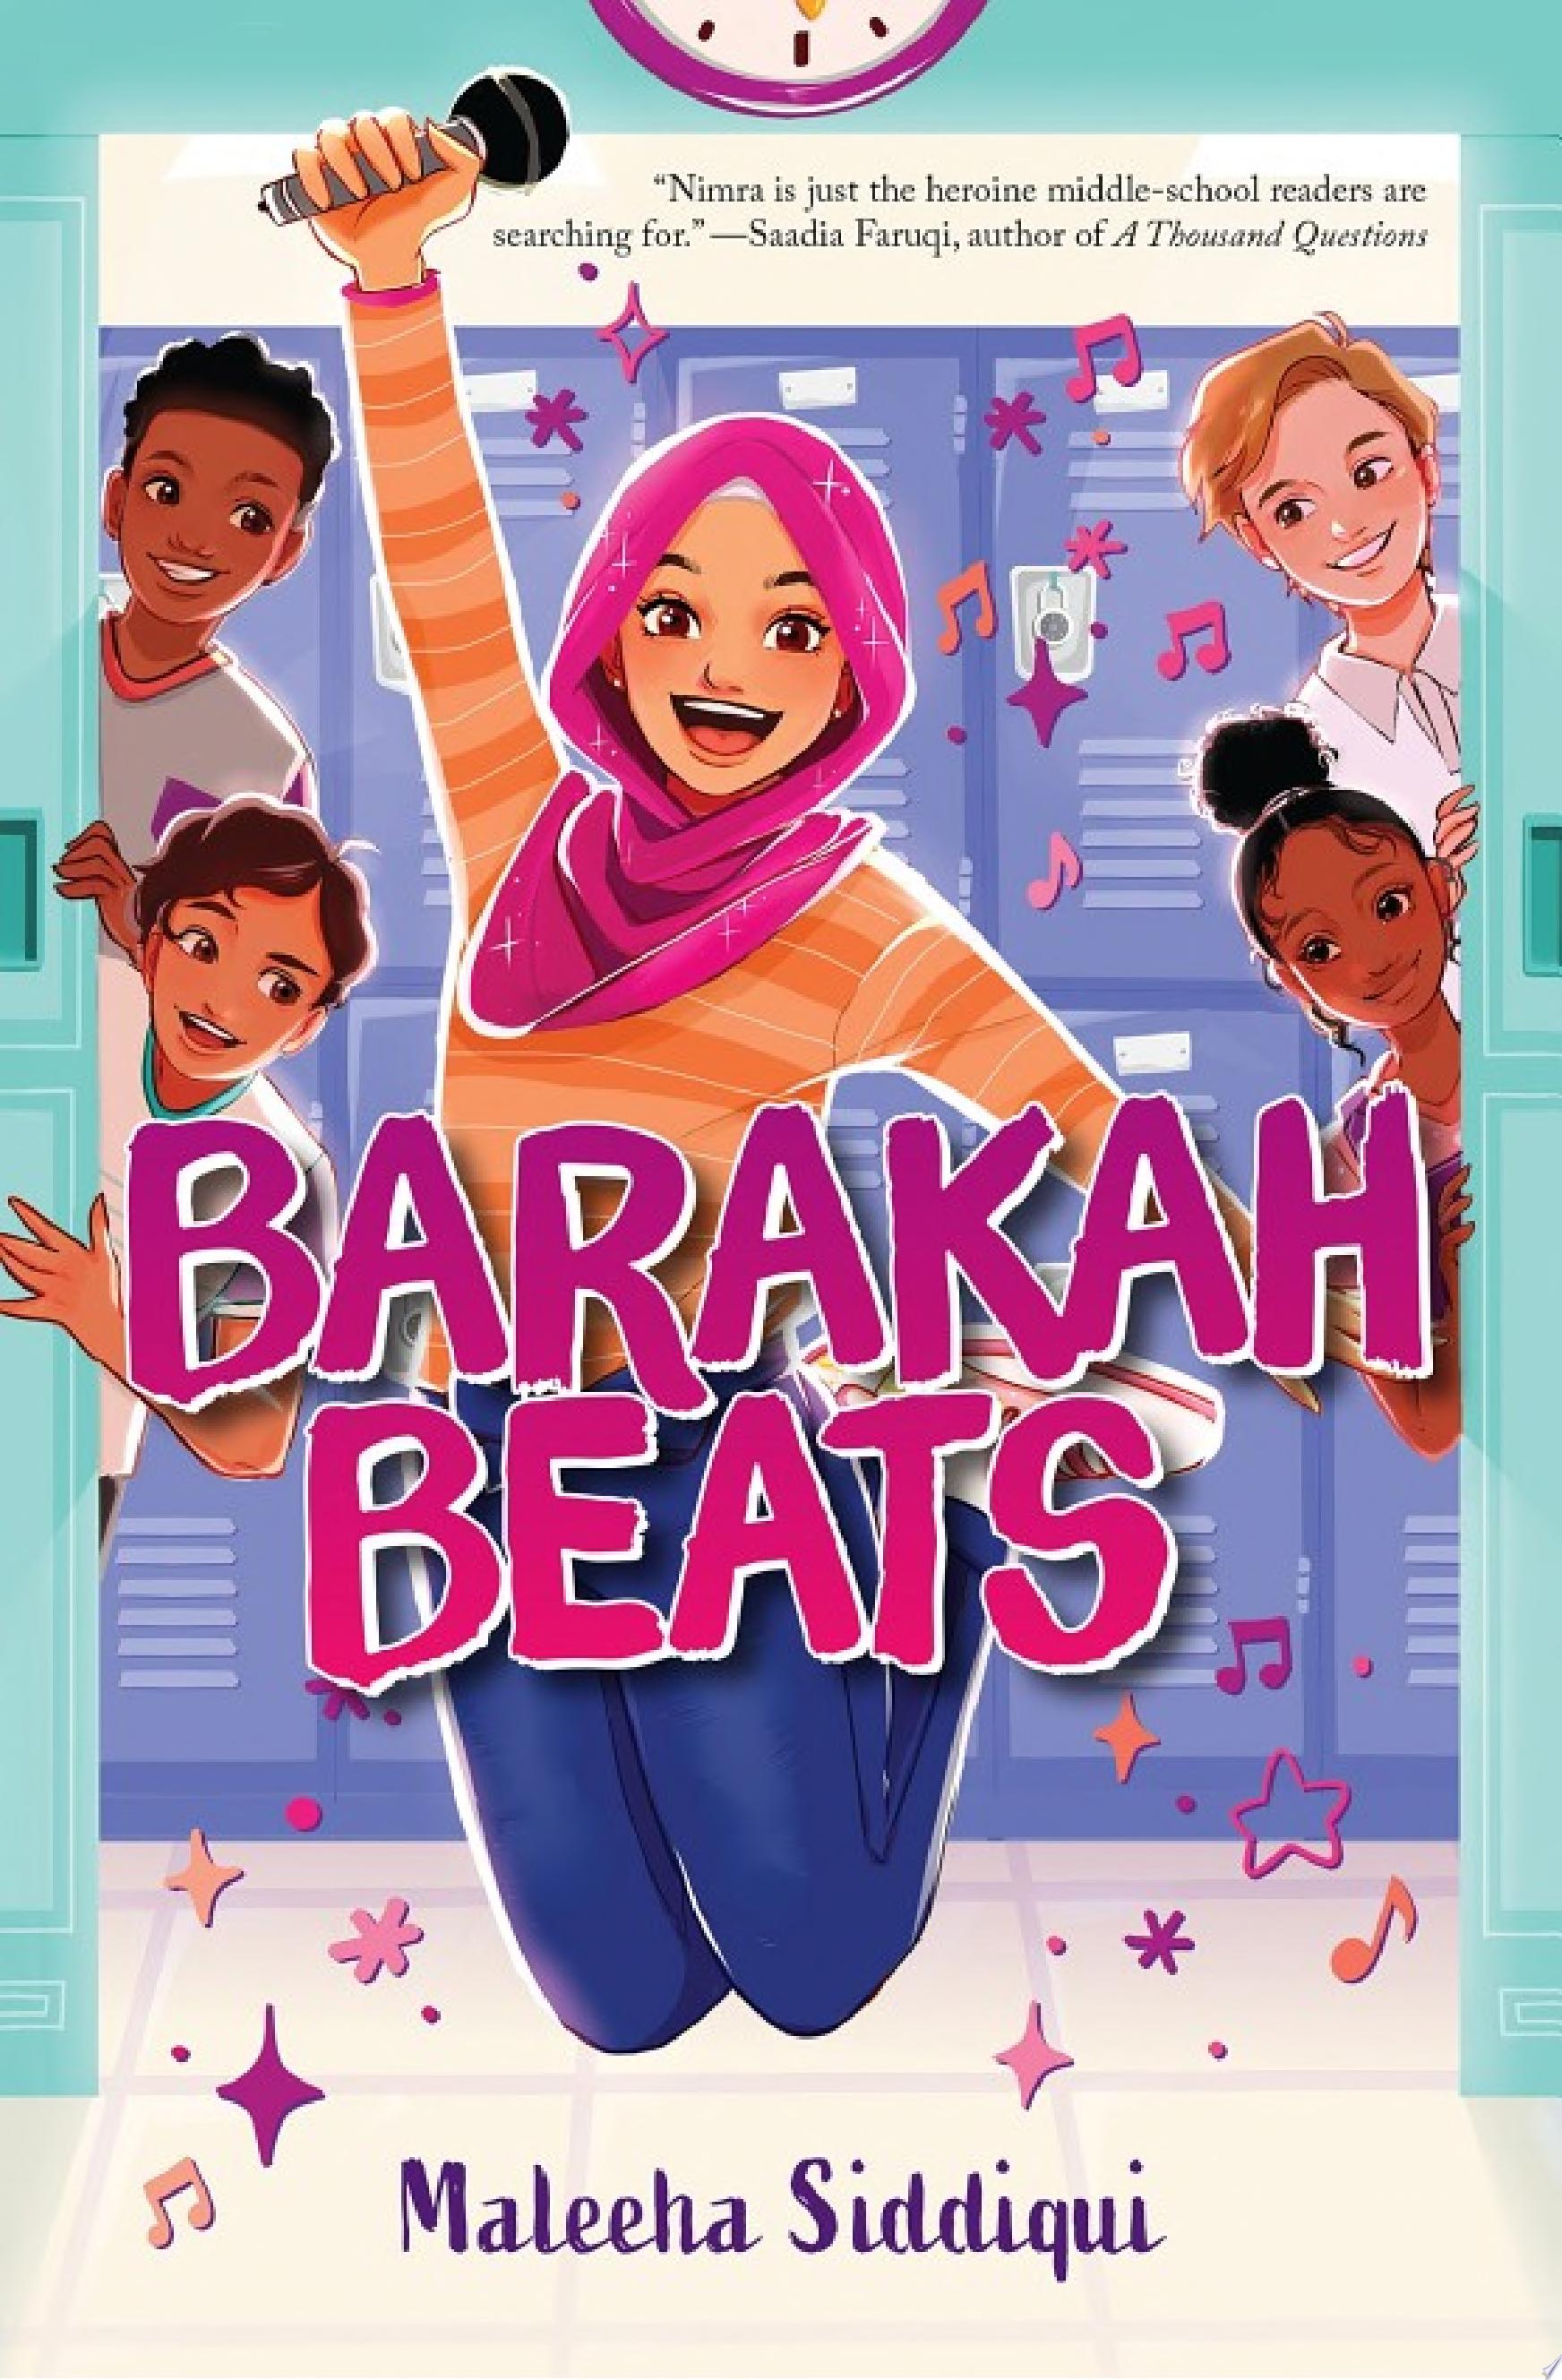 Image for "Barakah Beats"